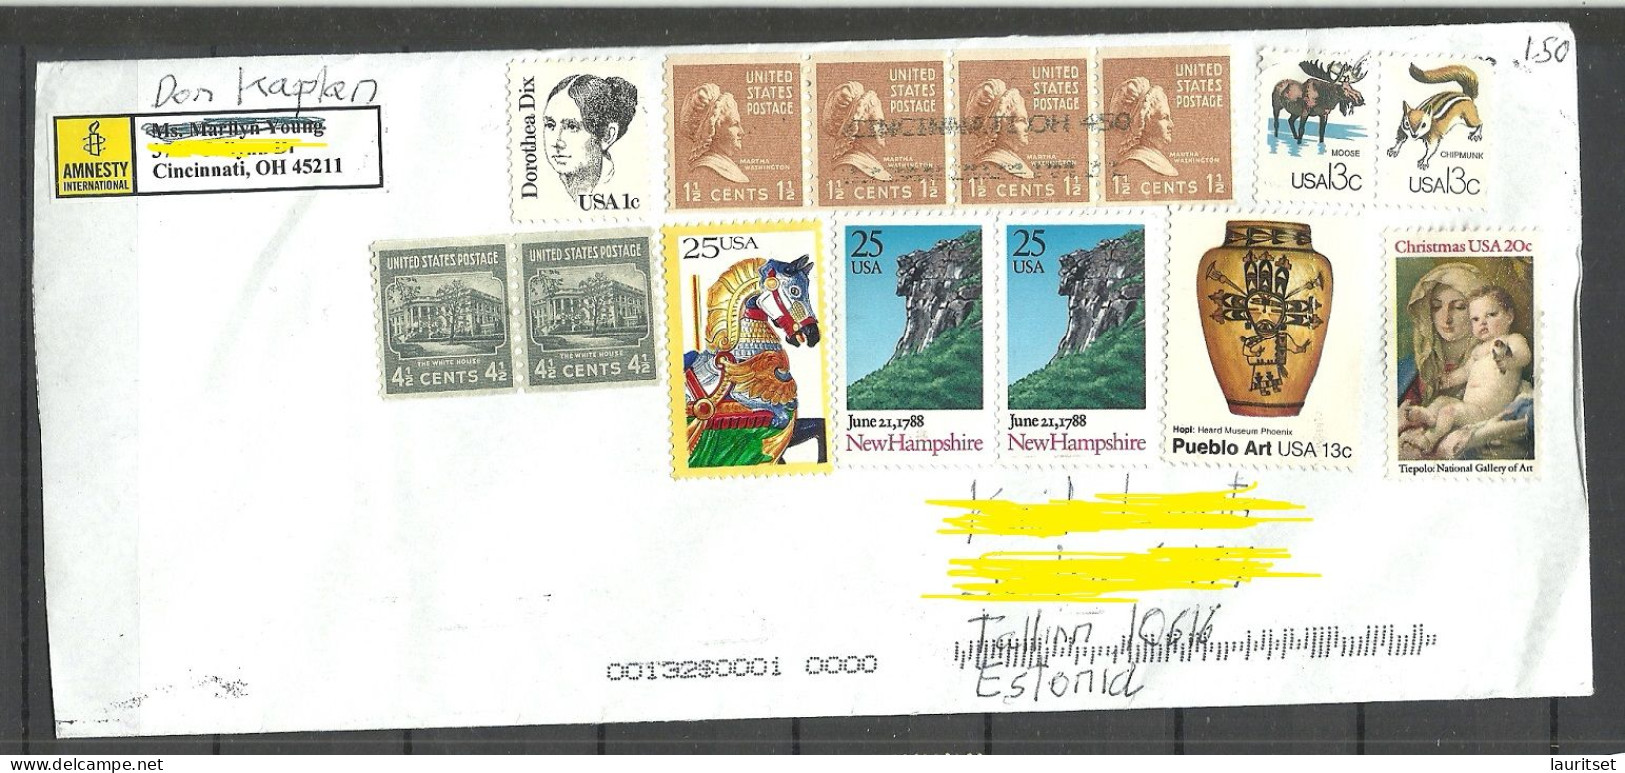 USA 2023 Cover To ESTONIA With Many Interesting Stamps - Briefe U. Dokumente